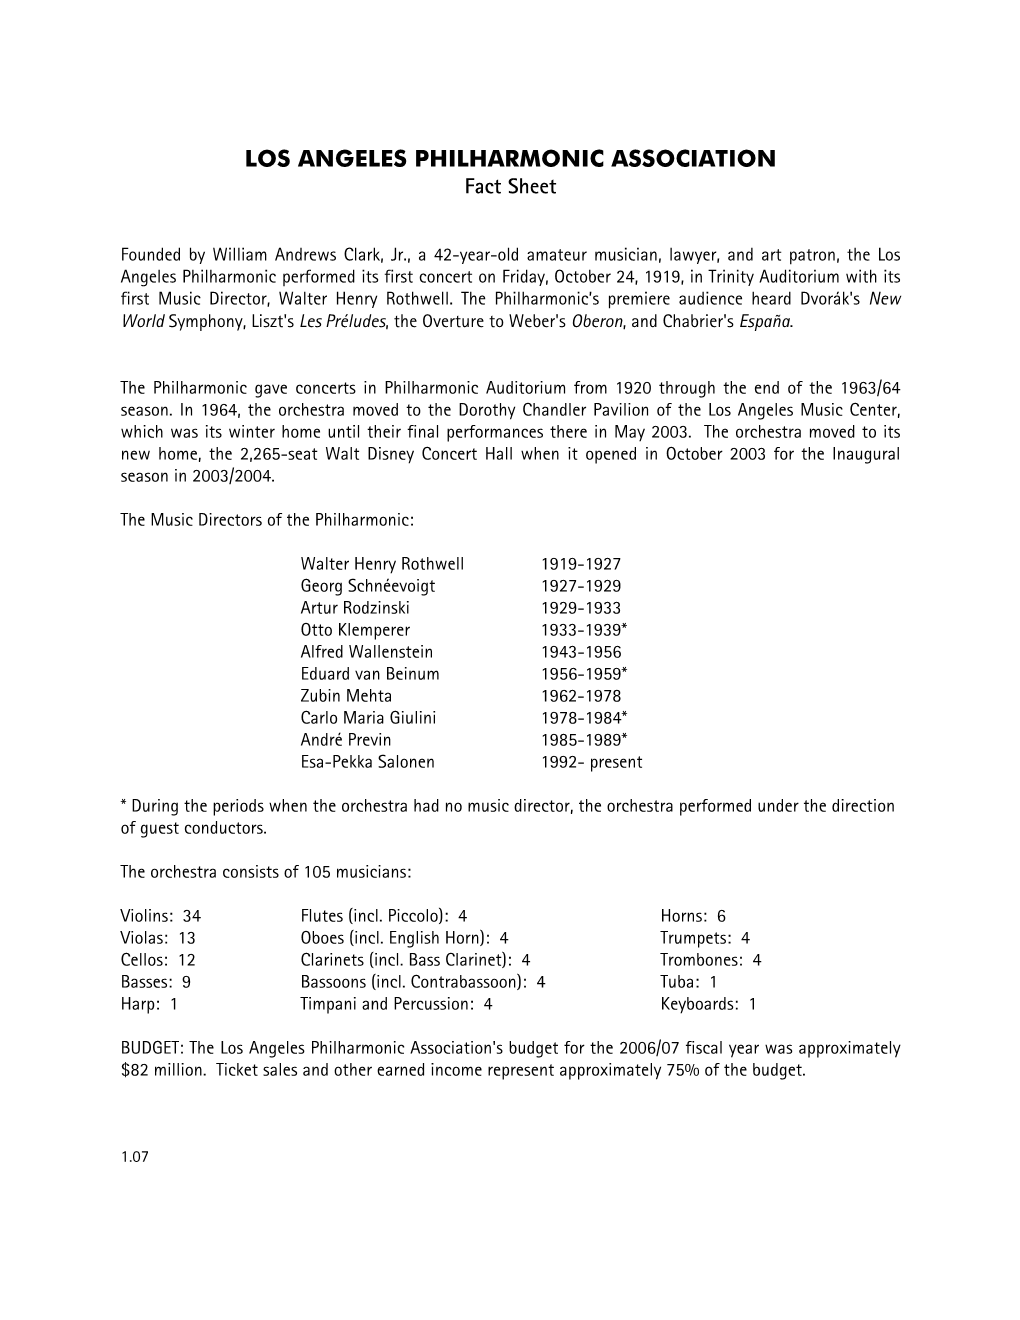 LOS ANGELES PHILHARMONIC ASSOCIATION Fact Sheet